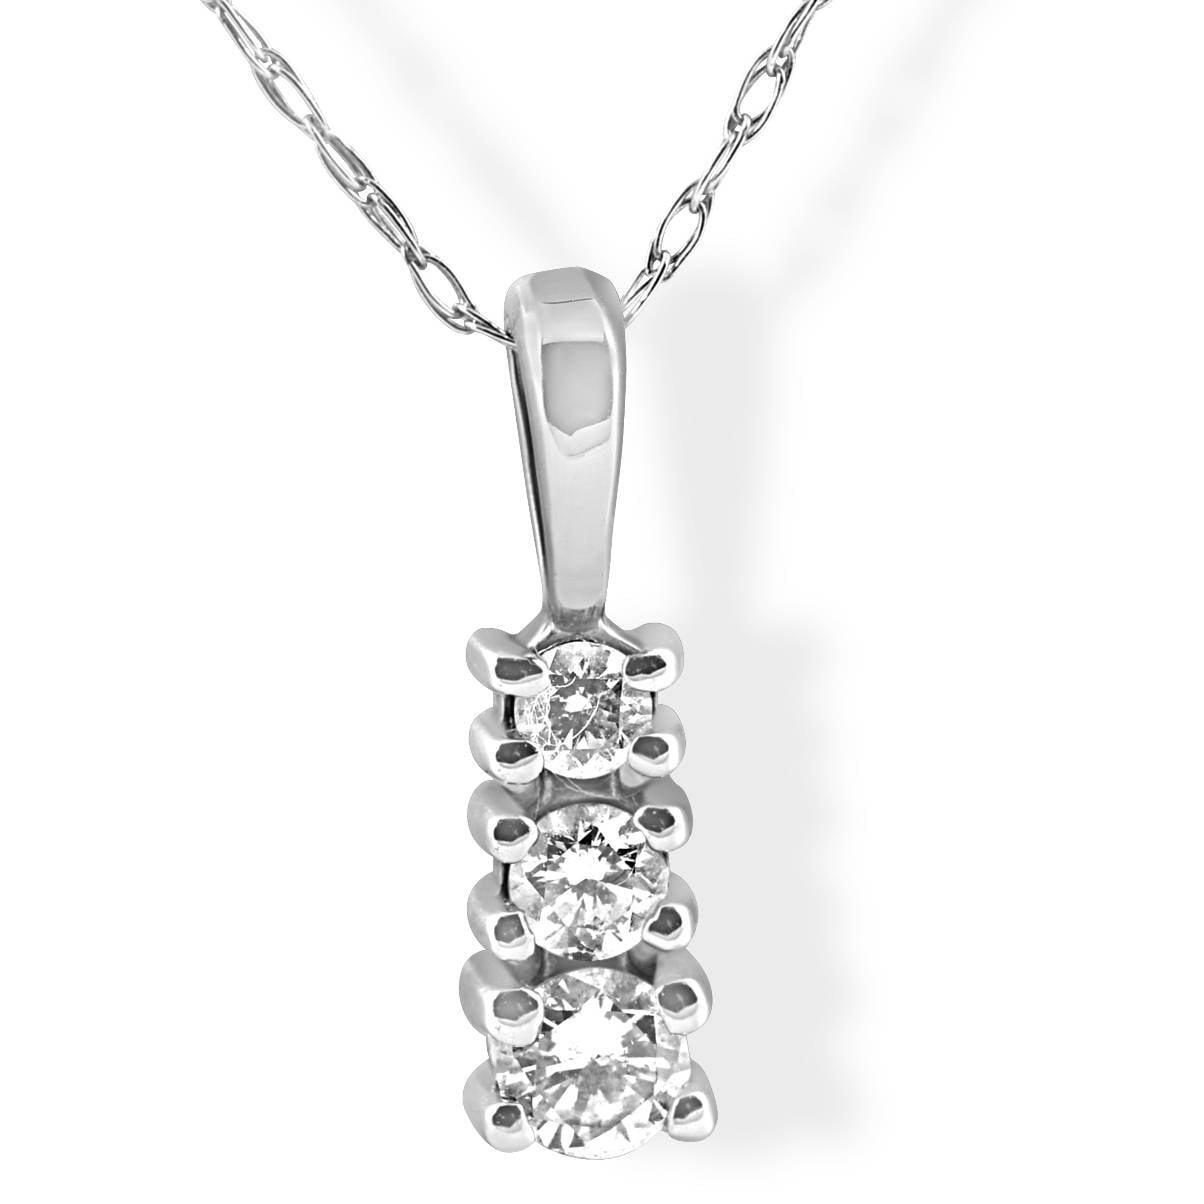 White stone pendant necklace